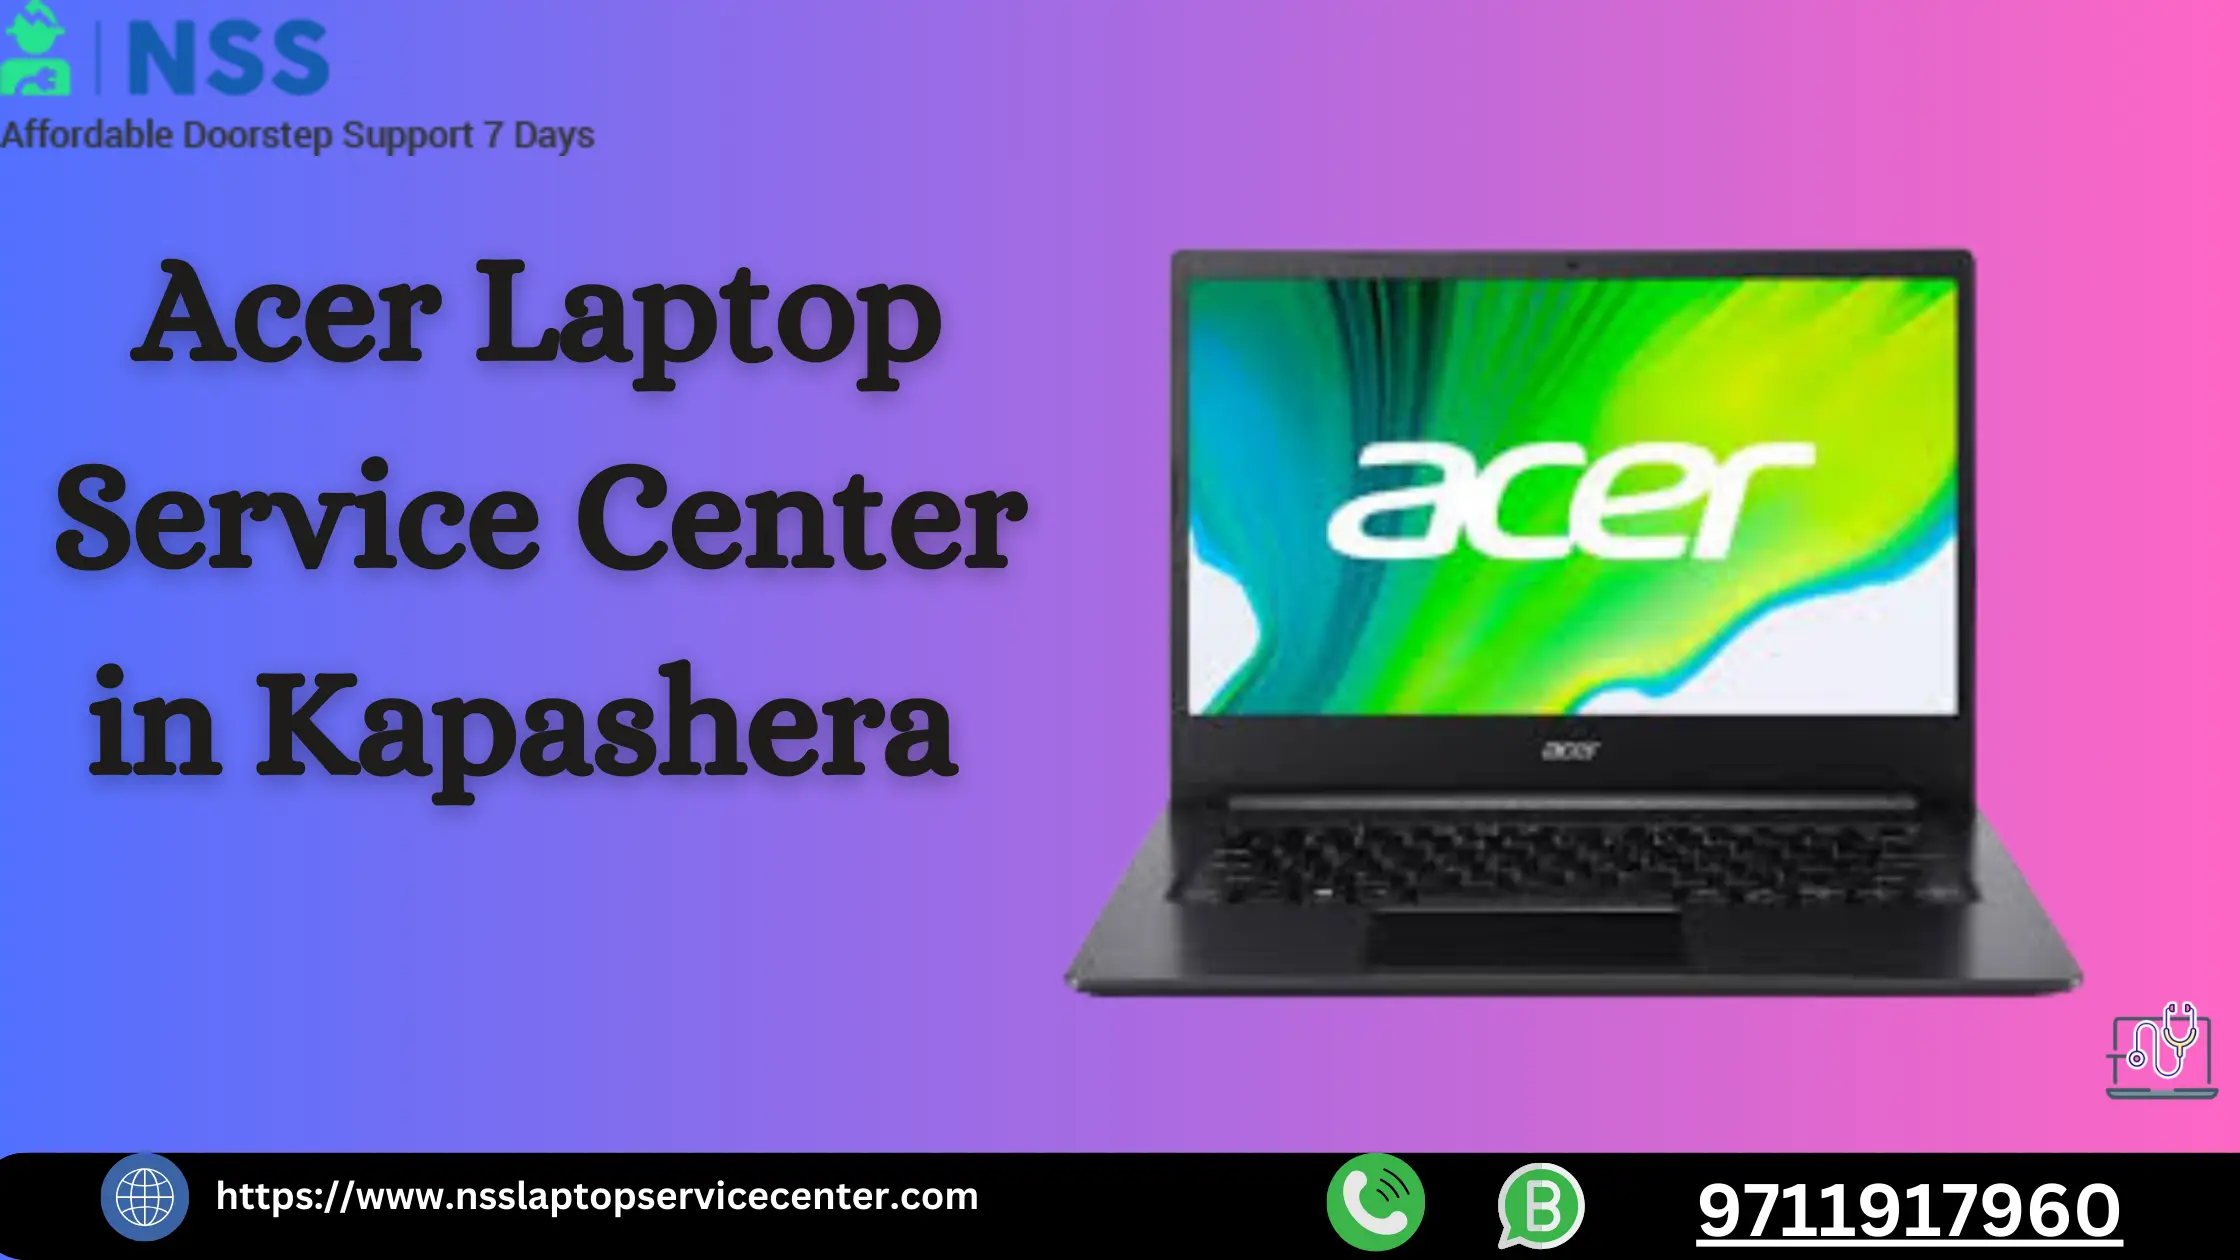 Acer Laptop Service Center in Kapashera Near Delhi